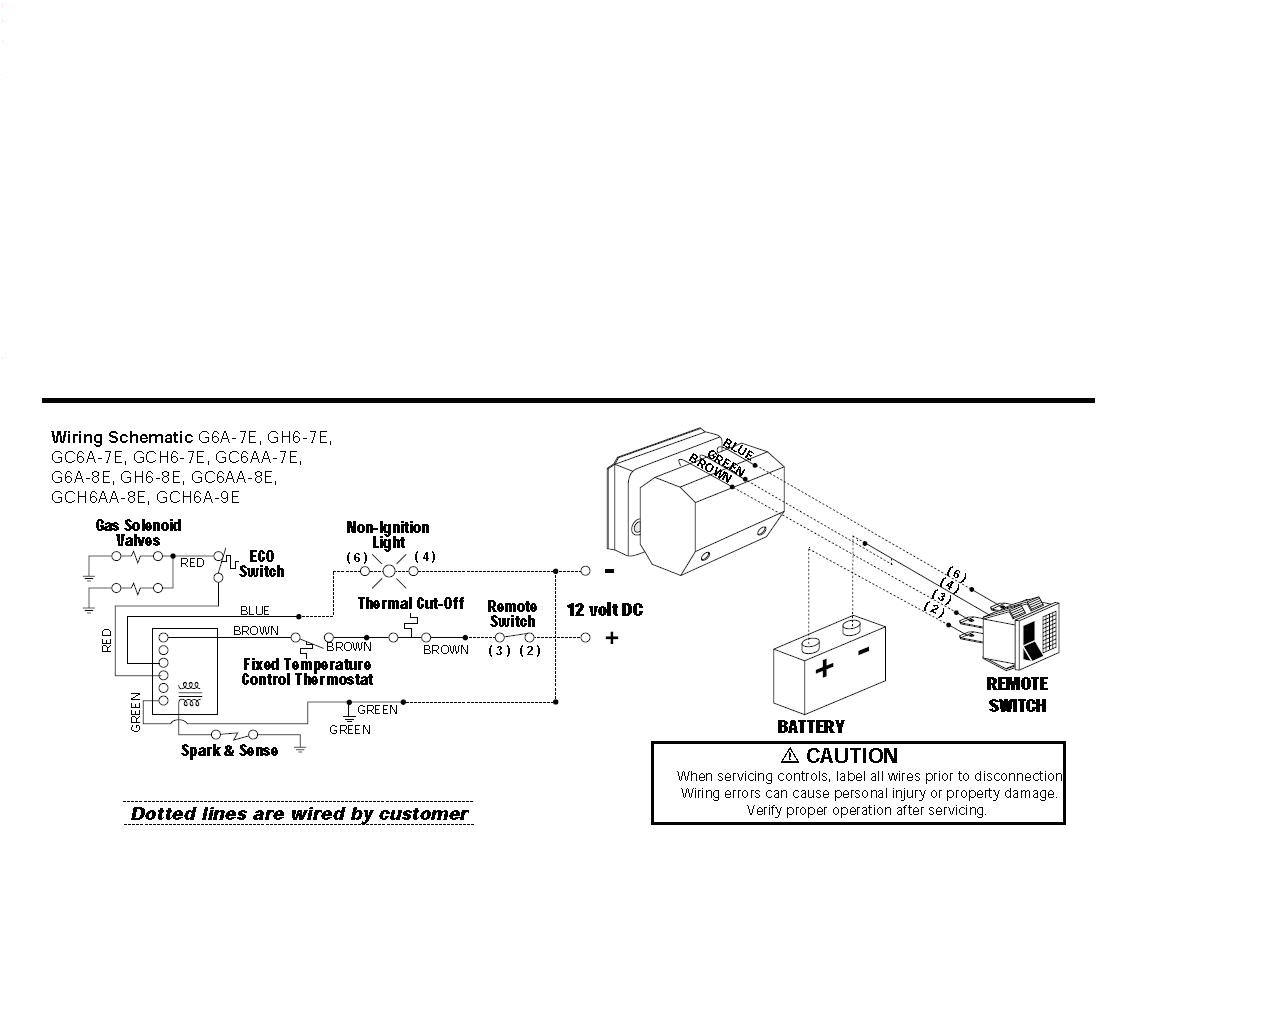 attwood wiring diagram electrical wiring diagram attwood s500 bilge pump wiring diagram attwood wiring diagram